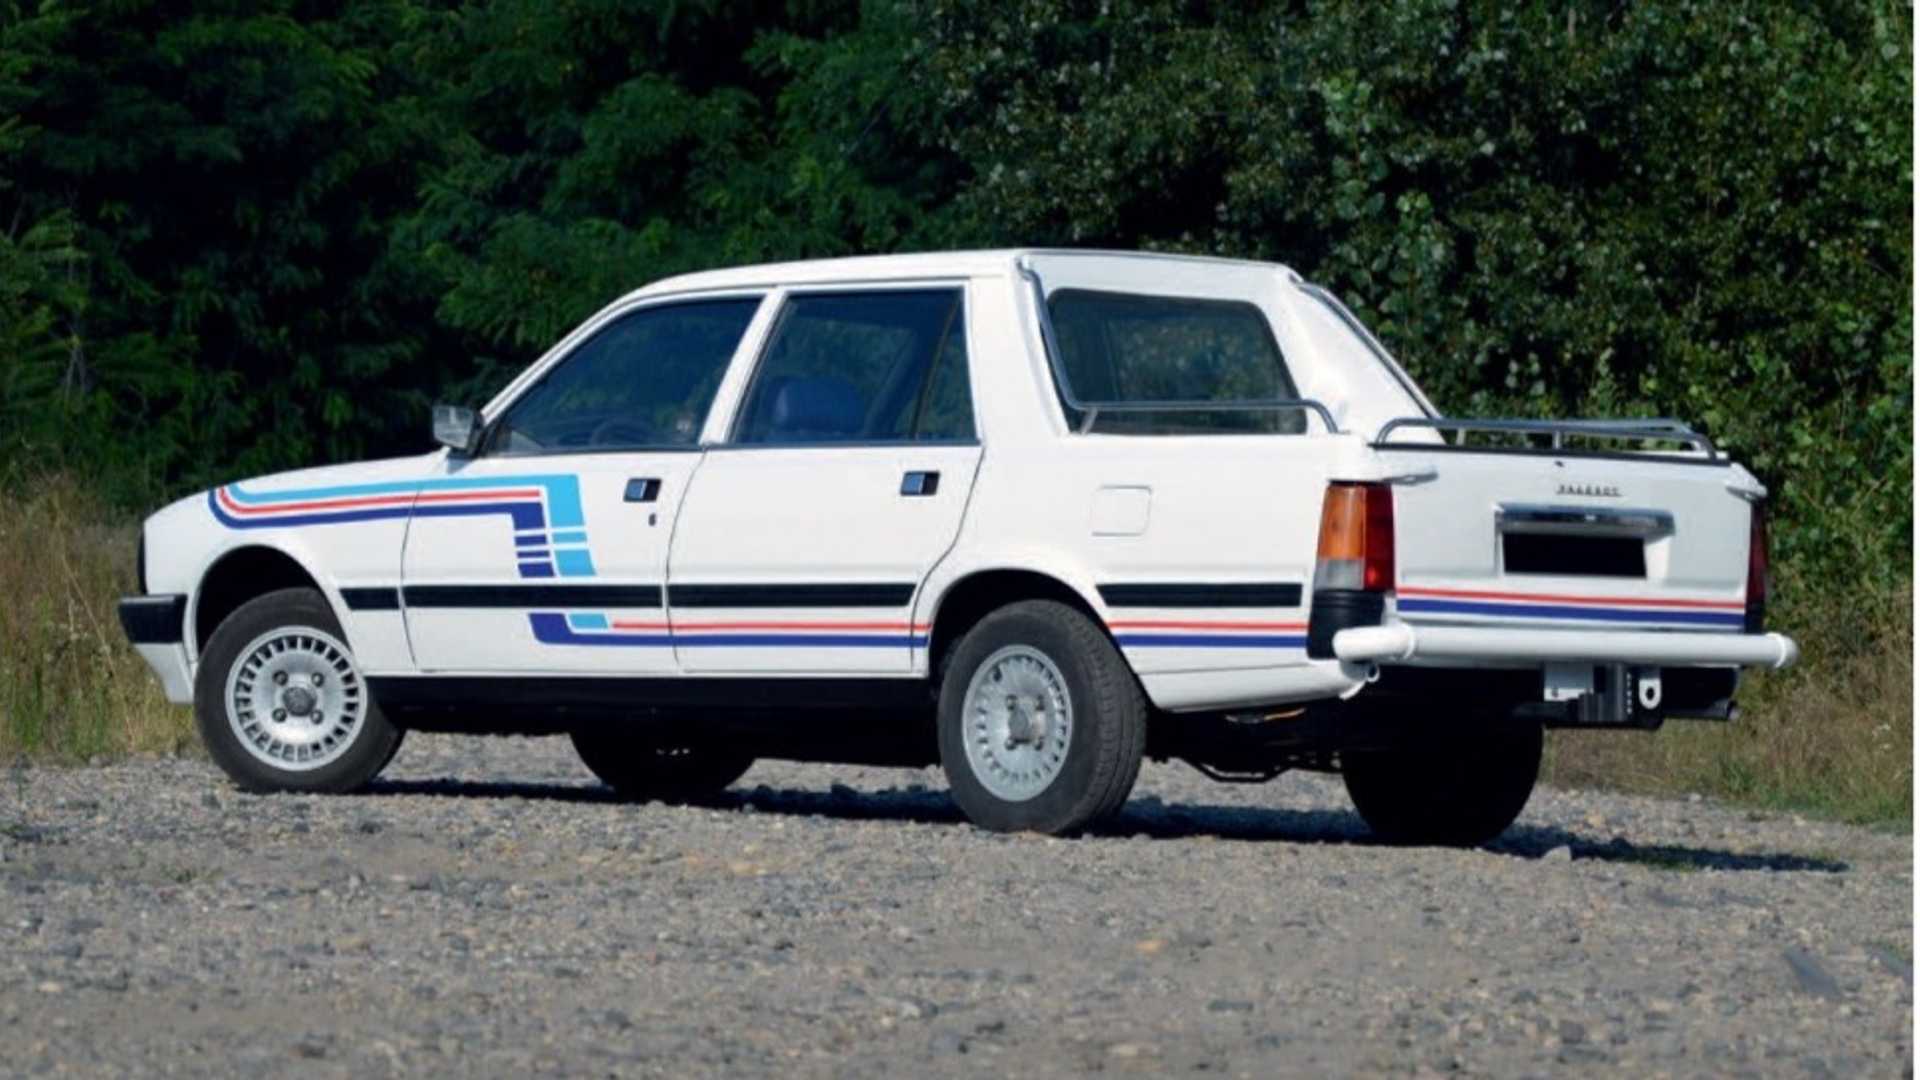 1985 Peugeot 505 pickup truck